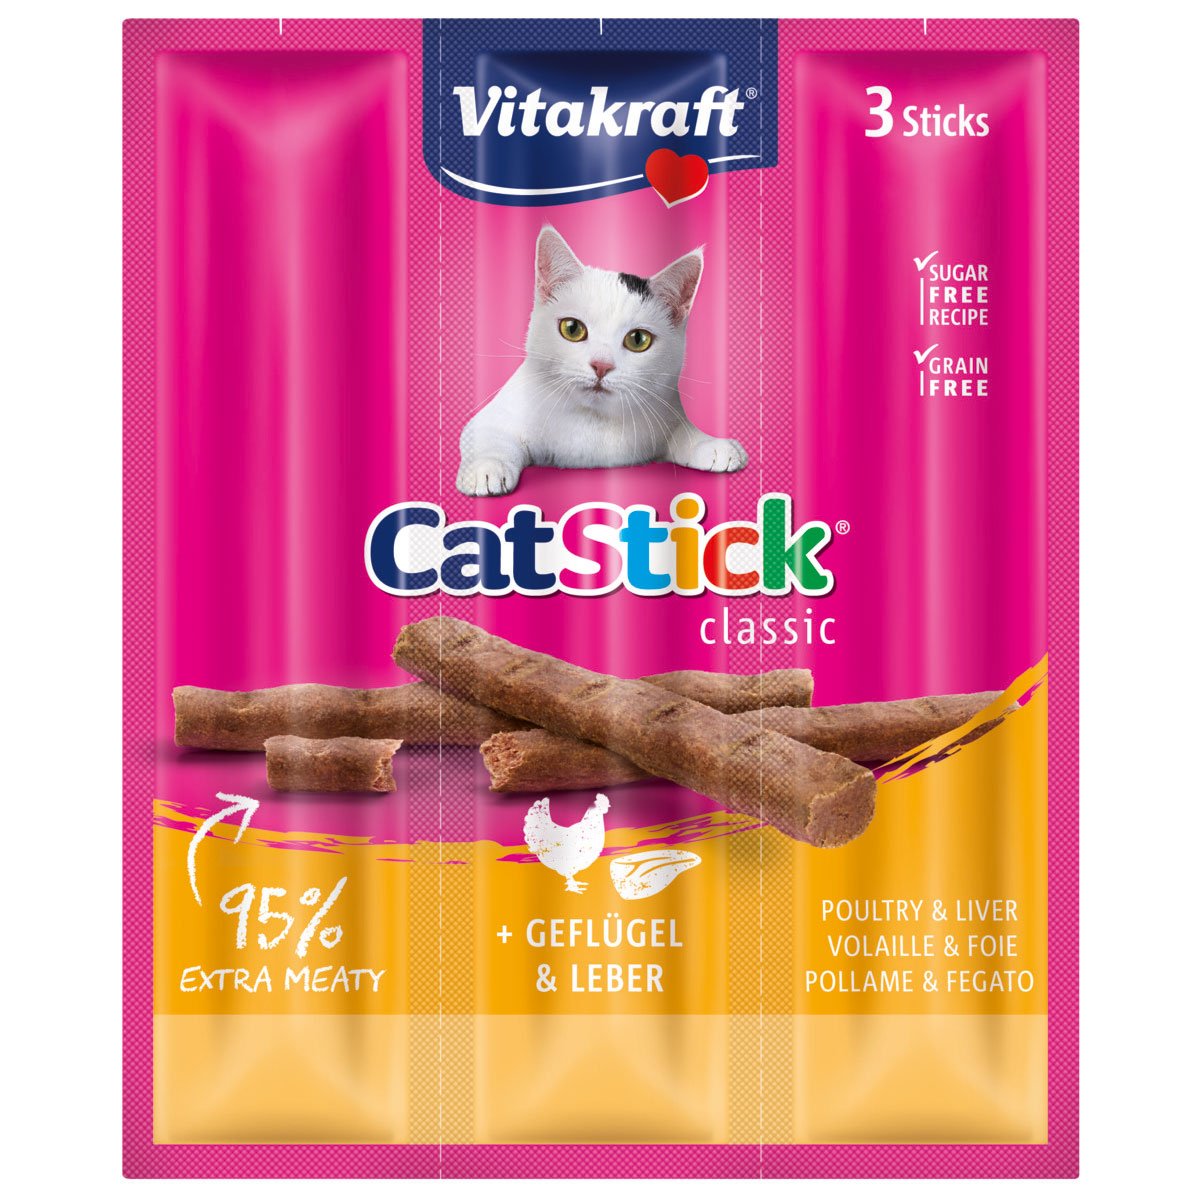 Vitakraft Cat-Stick mini Geflügel und Leber 5x3 Stück von Vitakraft